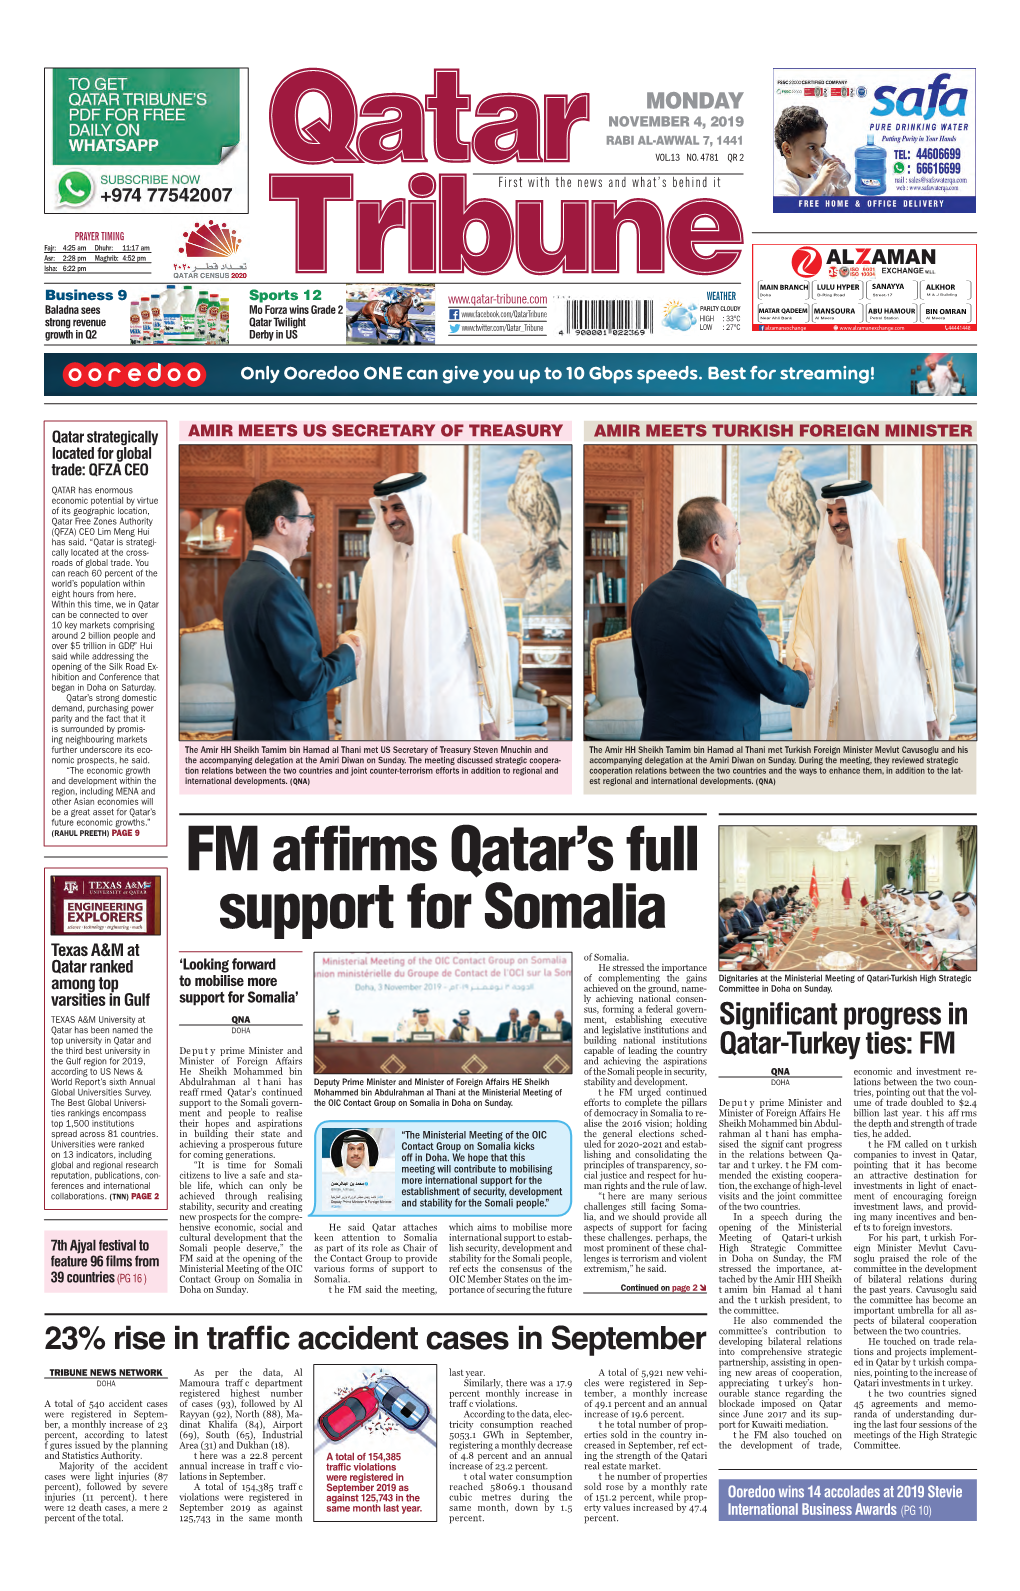 FM Affirms Qatar's Full Support for Somalia